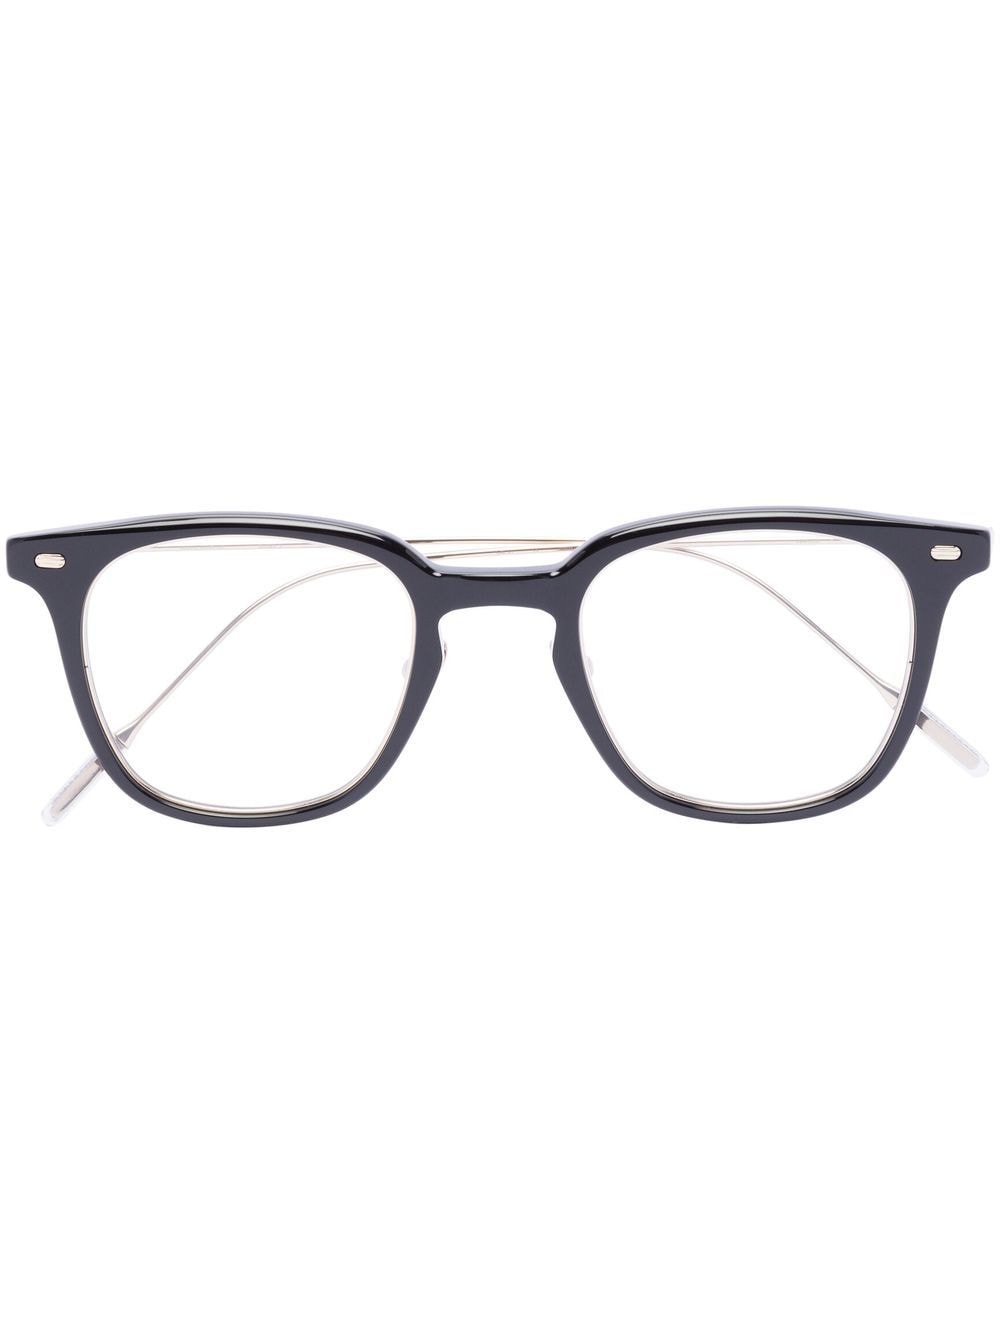 Booster 01 square-frame glasses